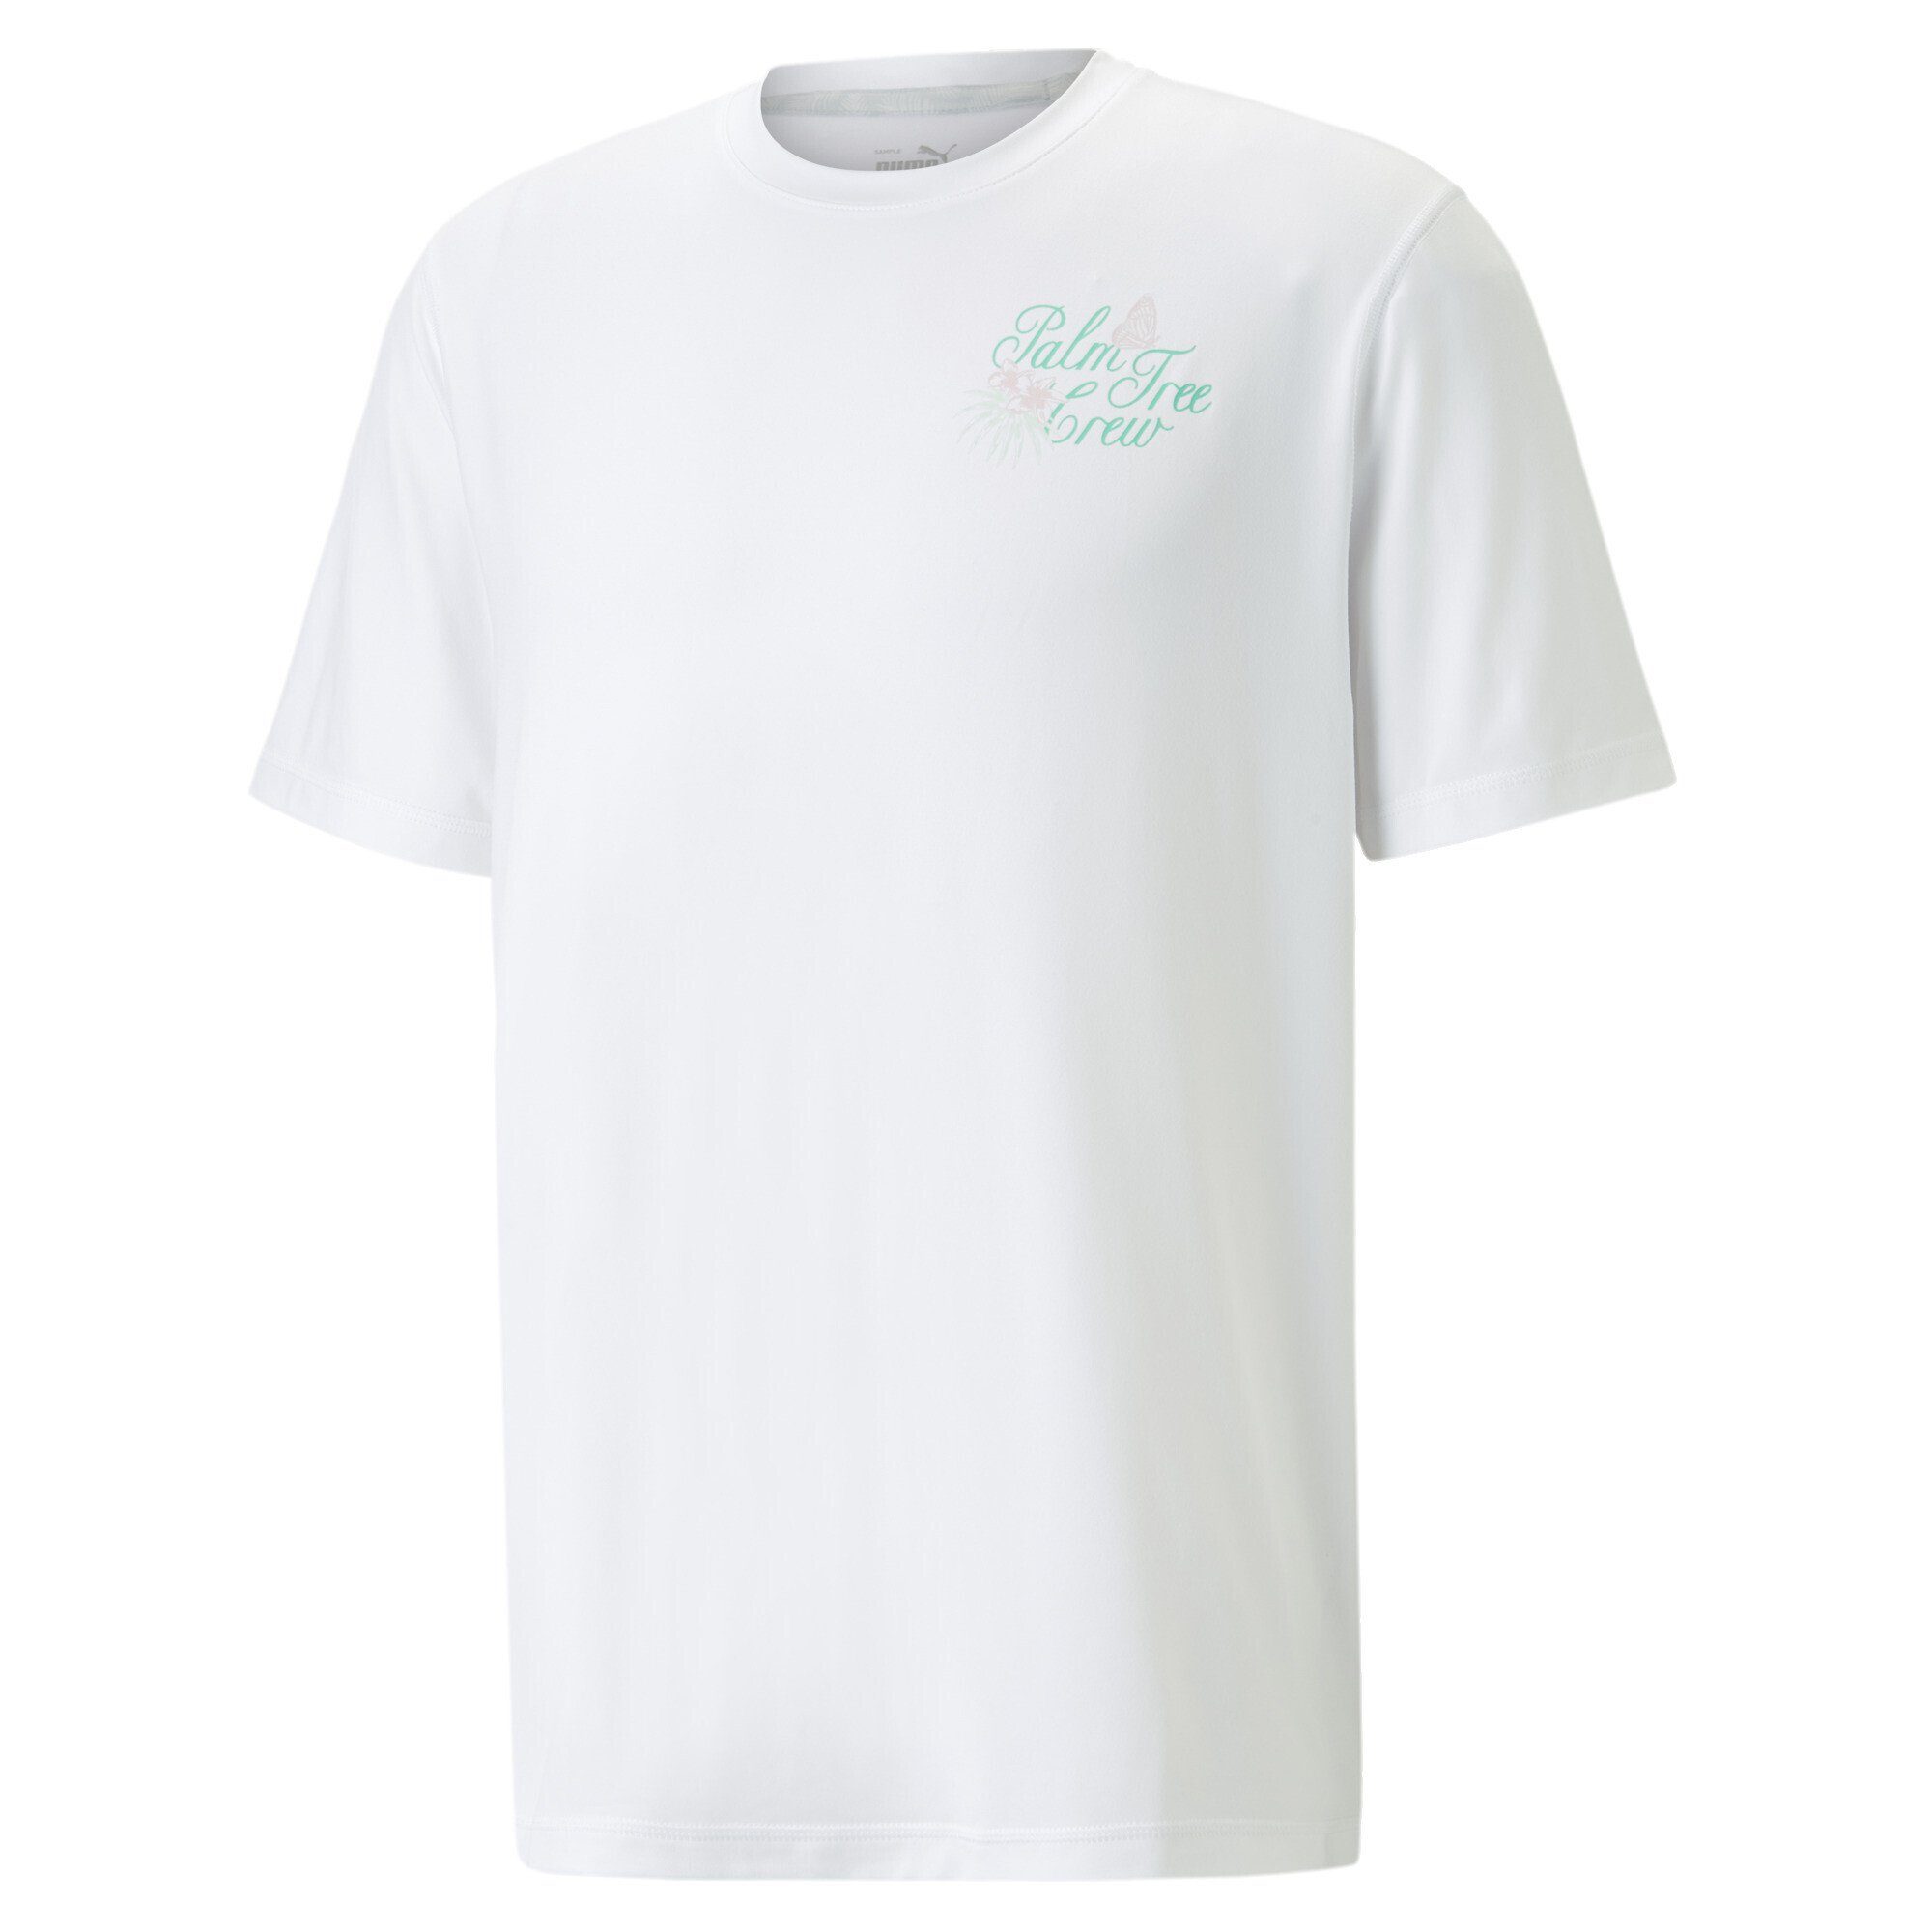 PUMA T-Shirt PUMA x Palm Tree Crew Paradise Golf-T-Shirt Herren